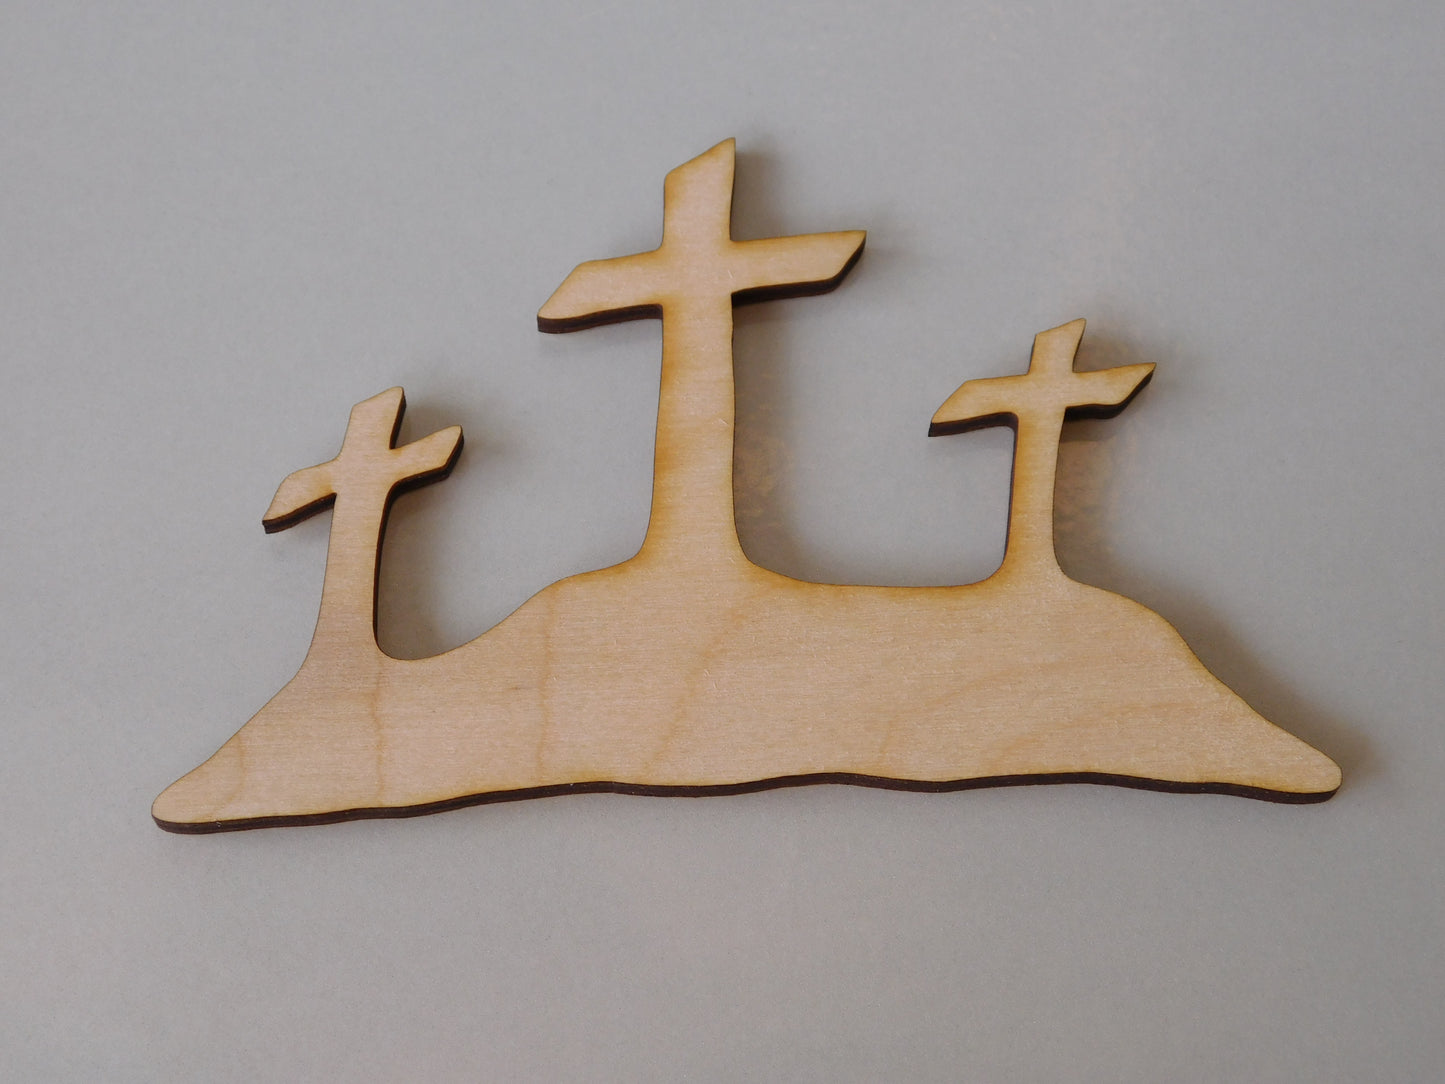 Three Wooden Crosses